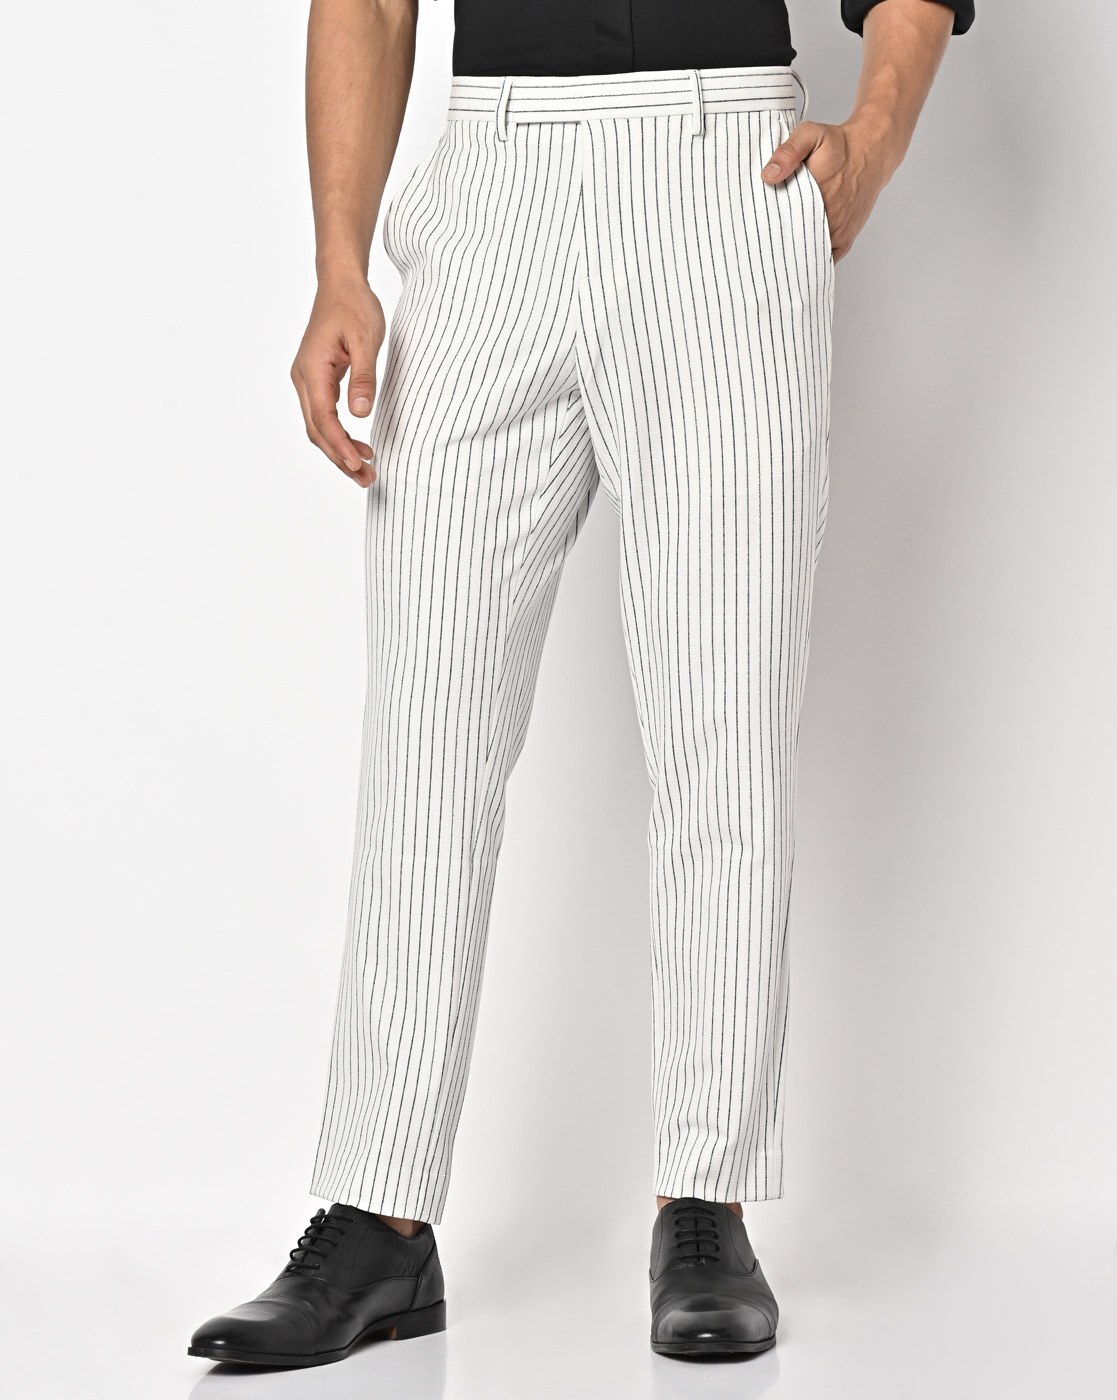 Black Stripe PowerStretch Pants